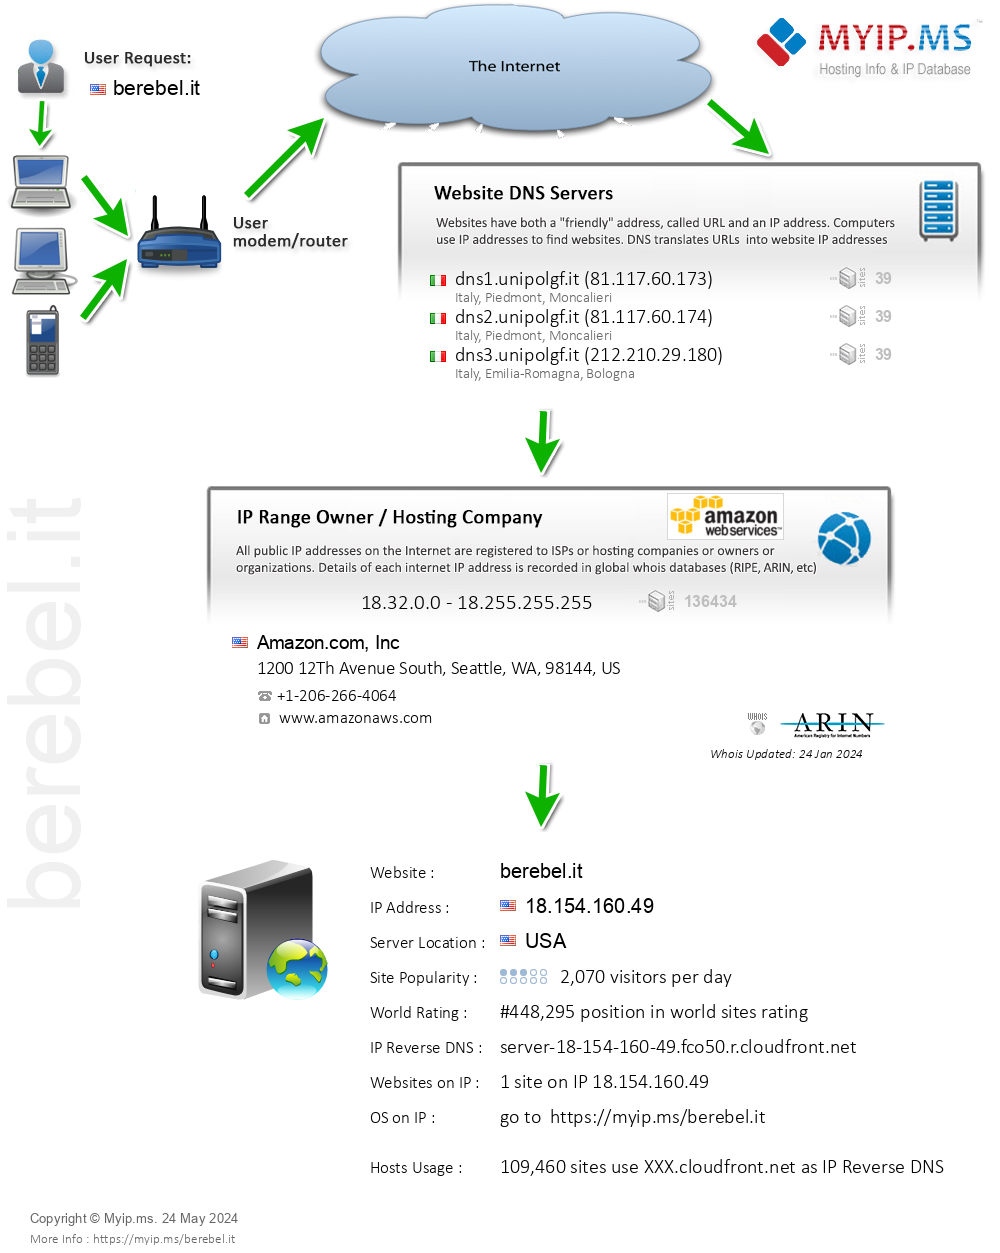 Berebel.it - Website Hosting Visual IP Diagram